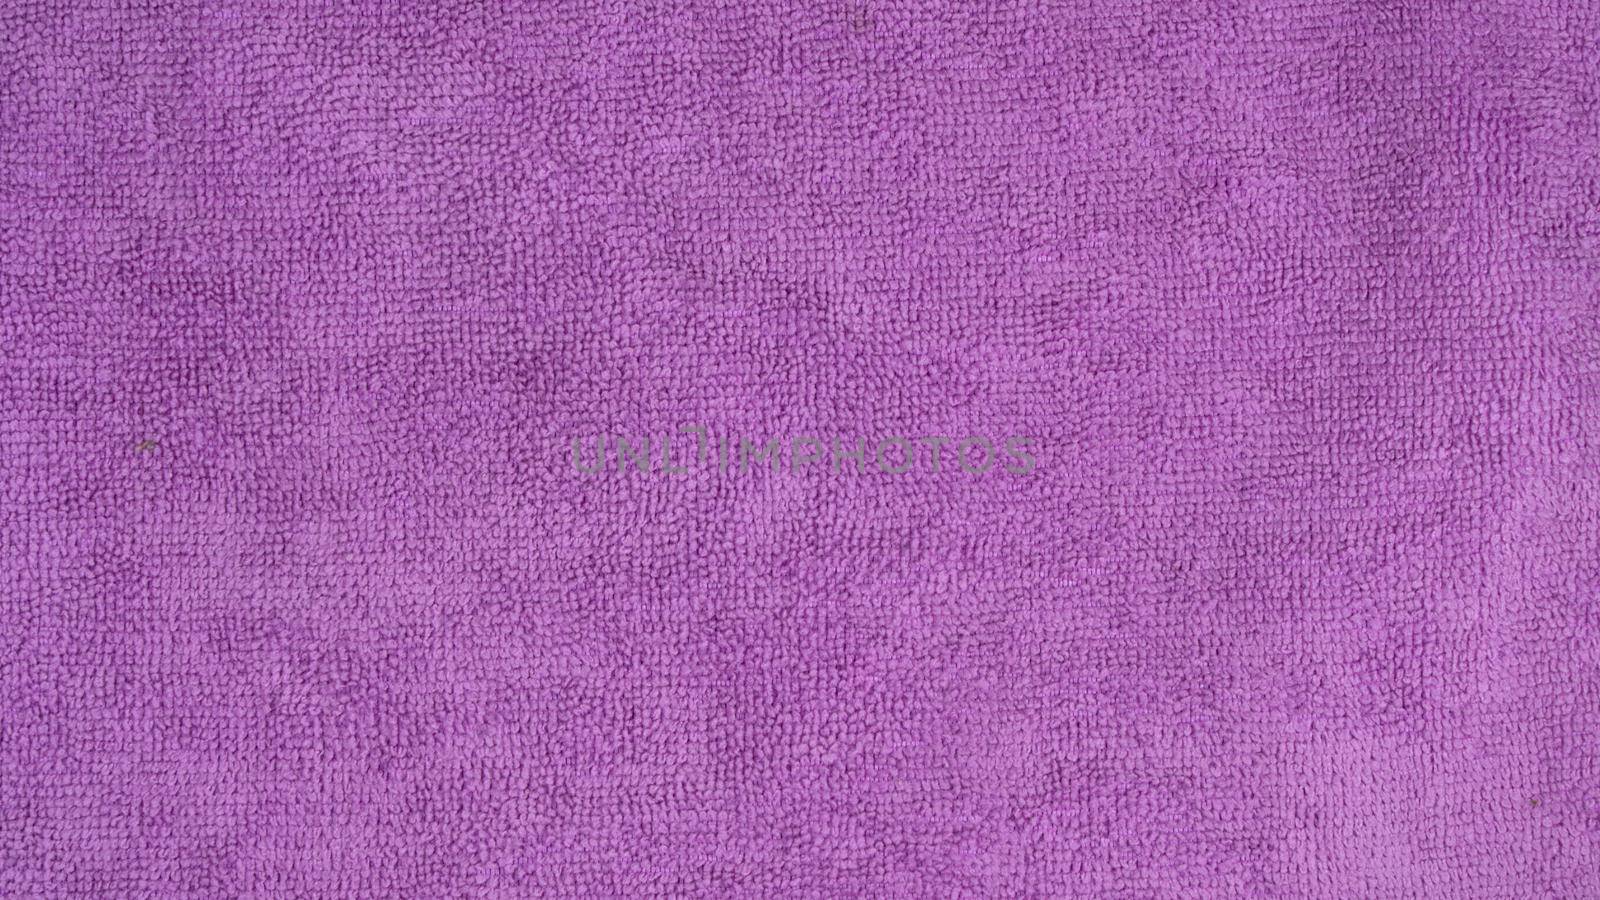 Purple Microfiber Texture Fabric Pile Background. High quality photo